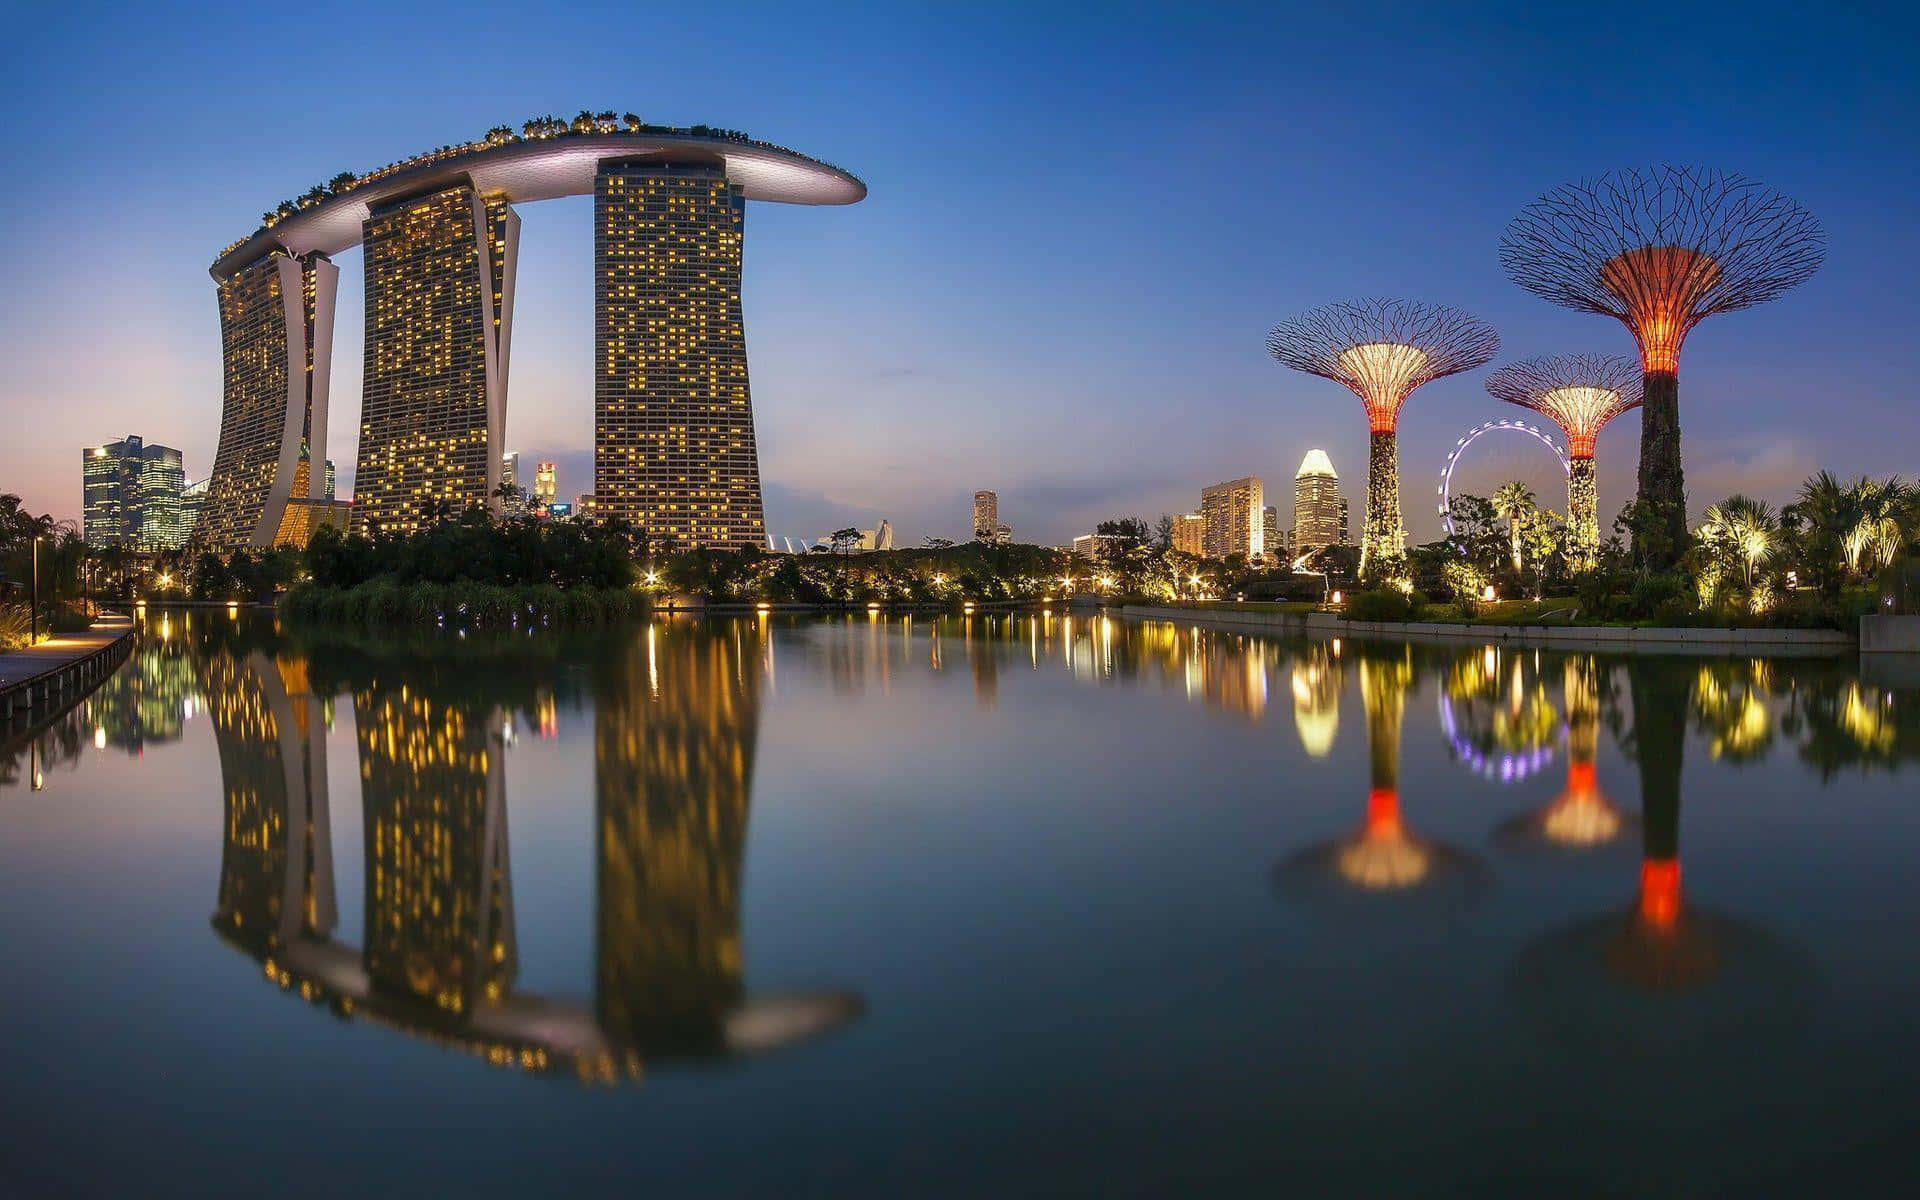 The wonders of Singapore